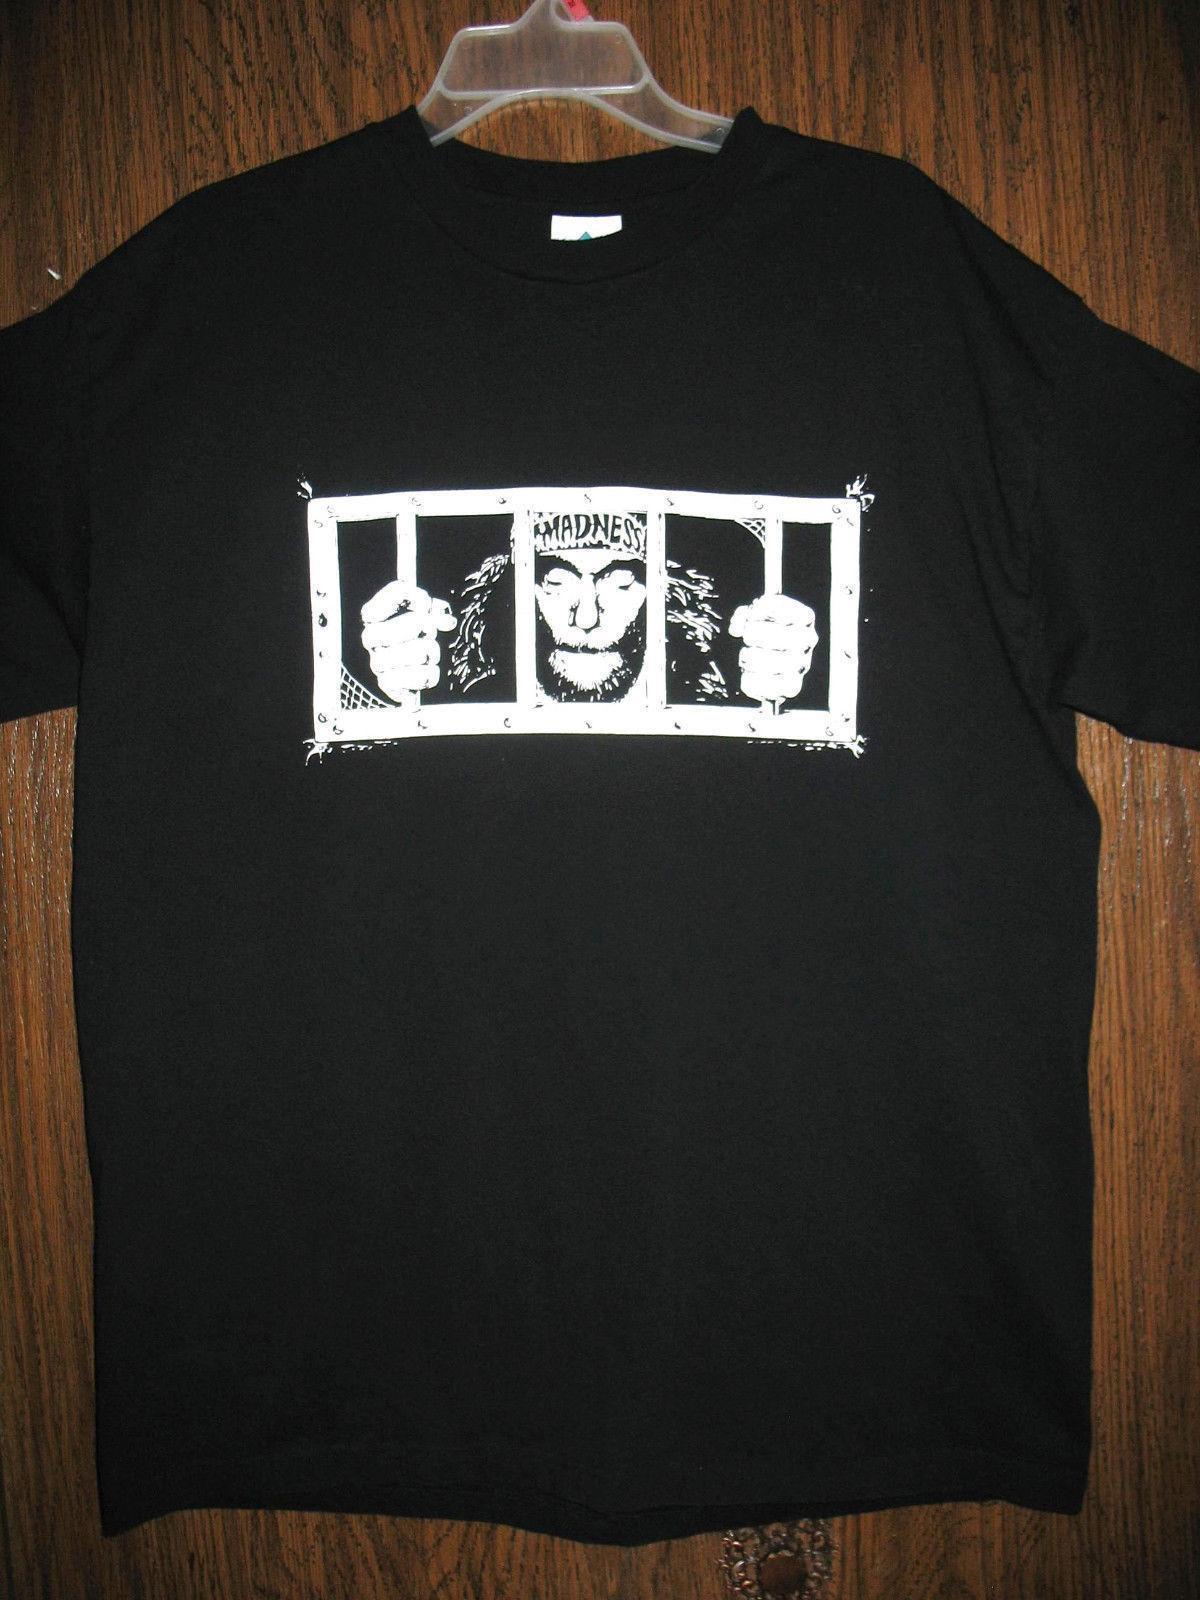 Randy Savage Madness Logo - Macho Man Randy Savage nWo Madness Prison WCW shirt New Gildan reprint  short sleeve men Tee o-neck knitted comfortable fabric